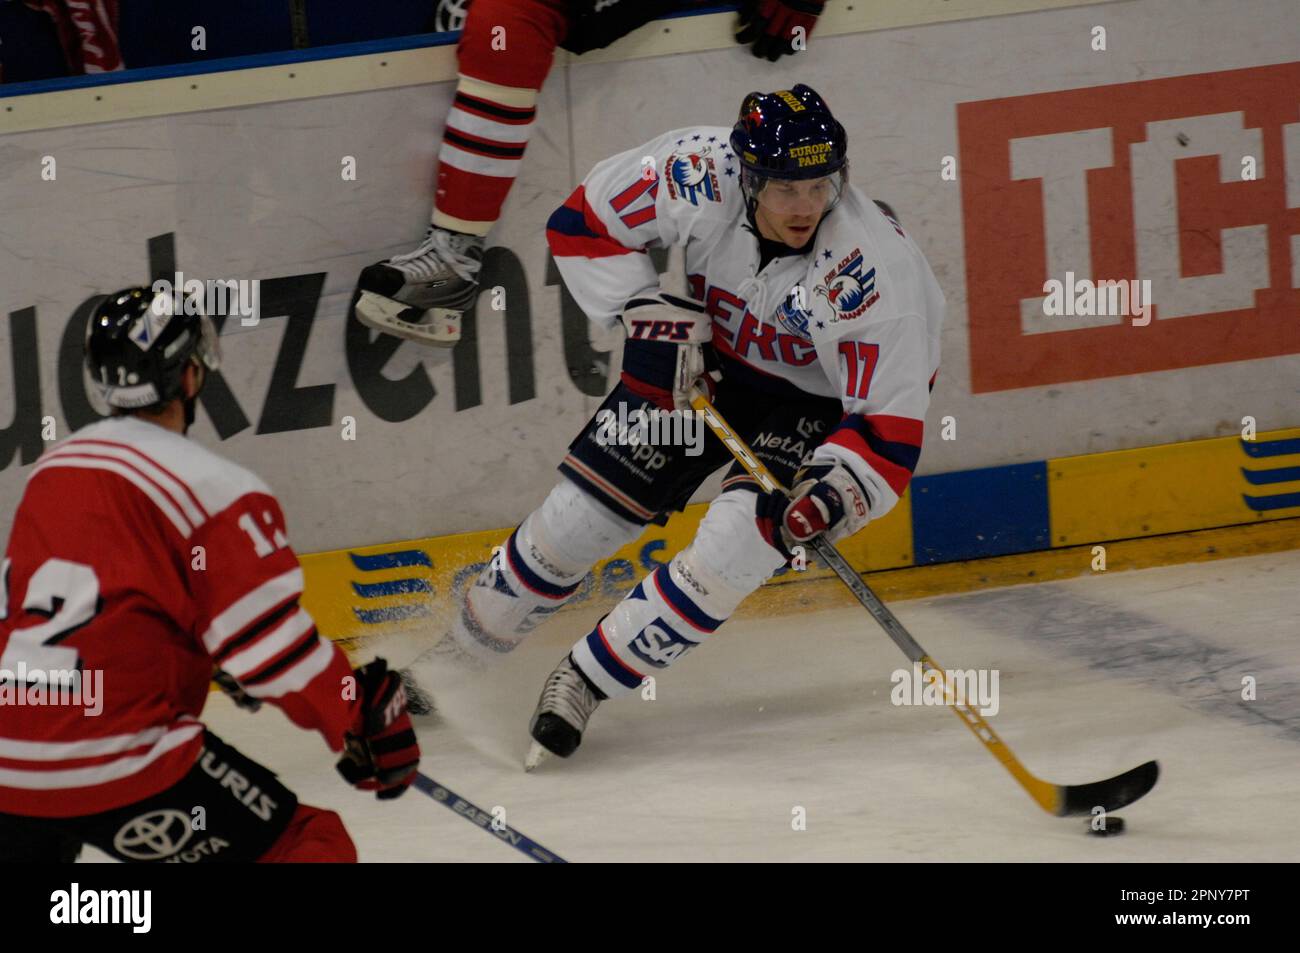 Deutsche eishockey liga hi-res stock photography and images - Alamy